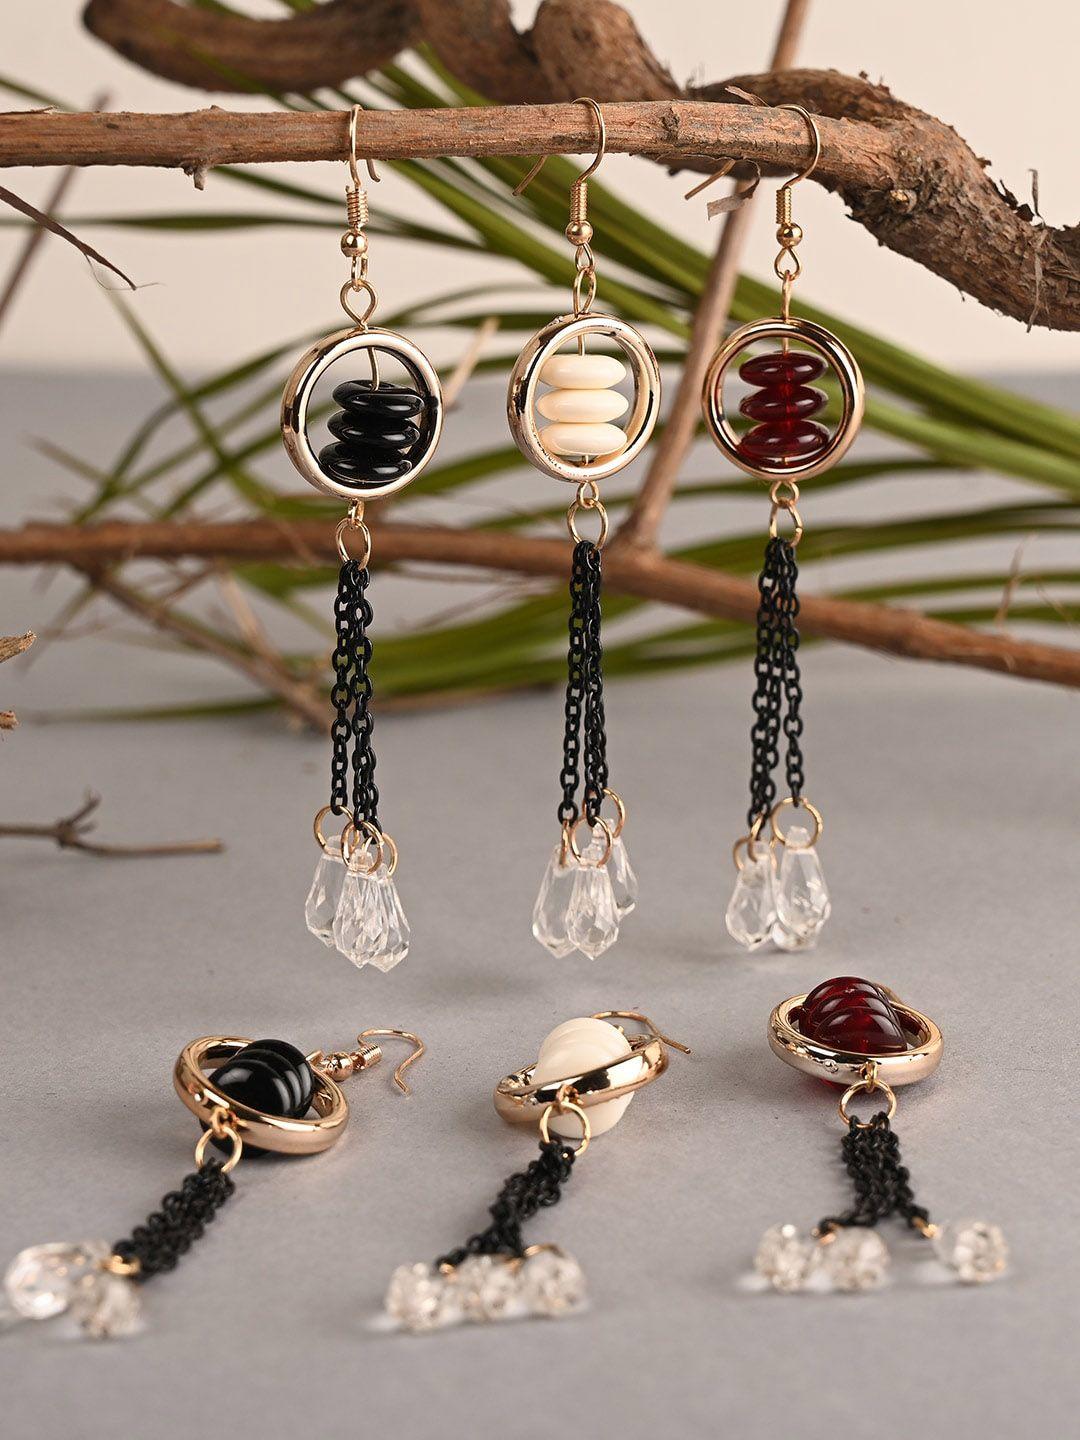 buckleup set of 3 contemporary drop earrings